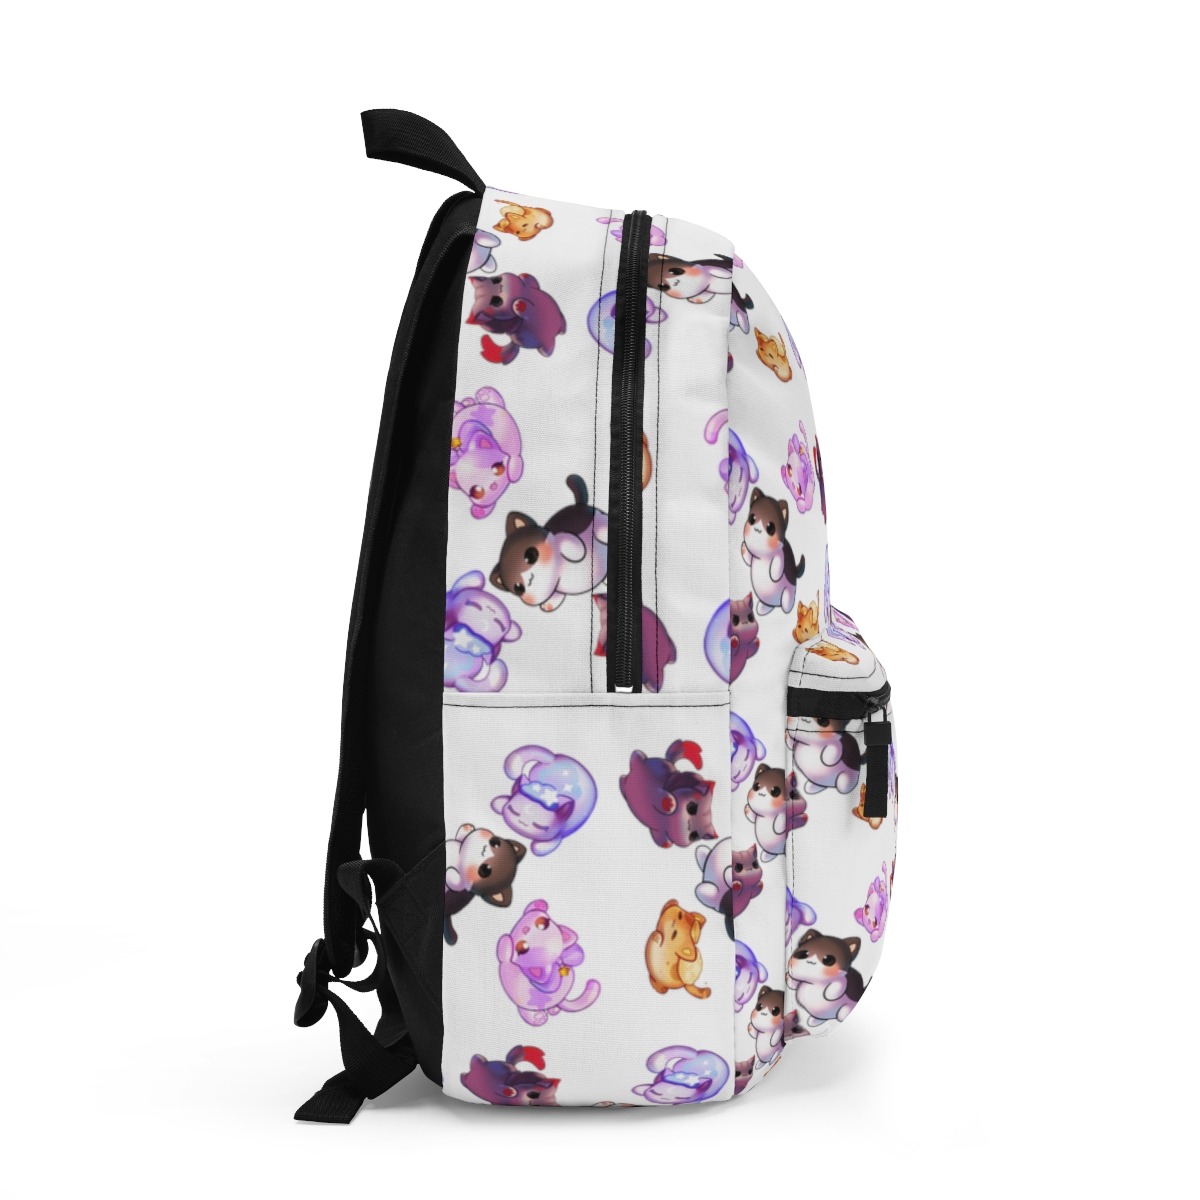 https://nextshirt.shop/wp-content/uploads/2021/08/Cute-backpack-Cute-bookbag-Cute-merch-Cute-apparel-3-2.jpg